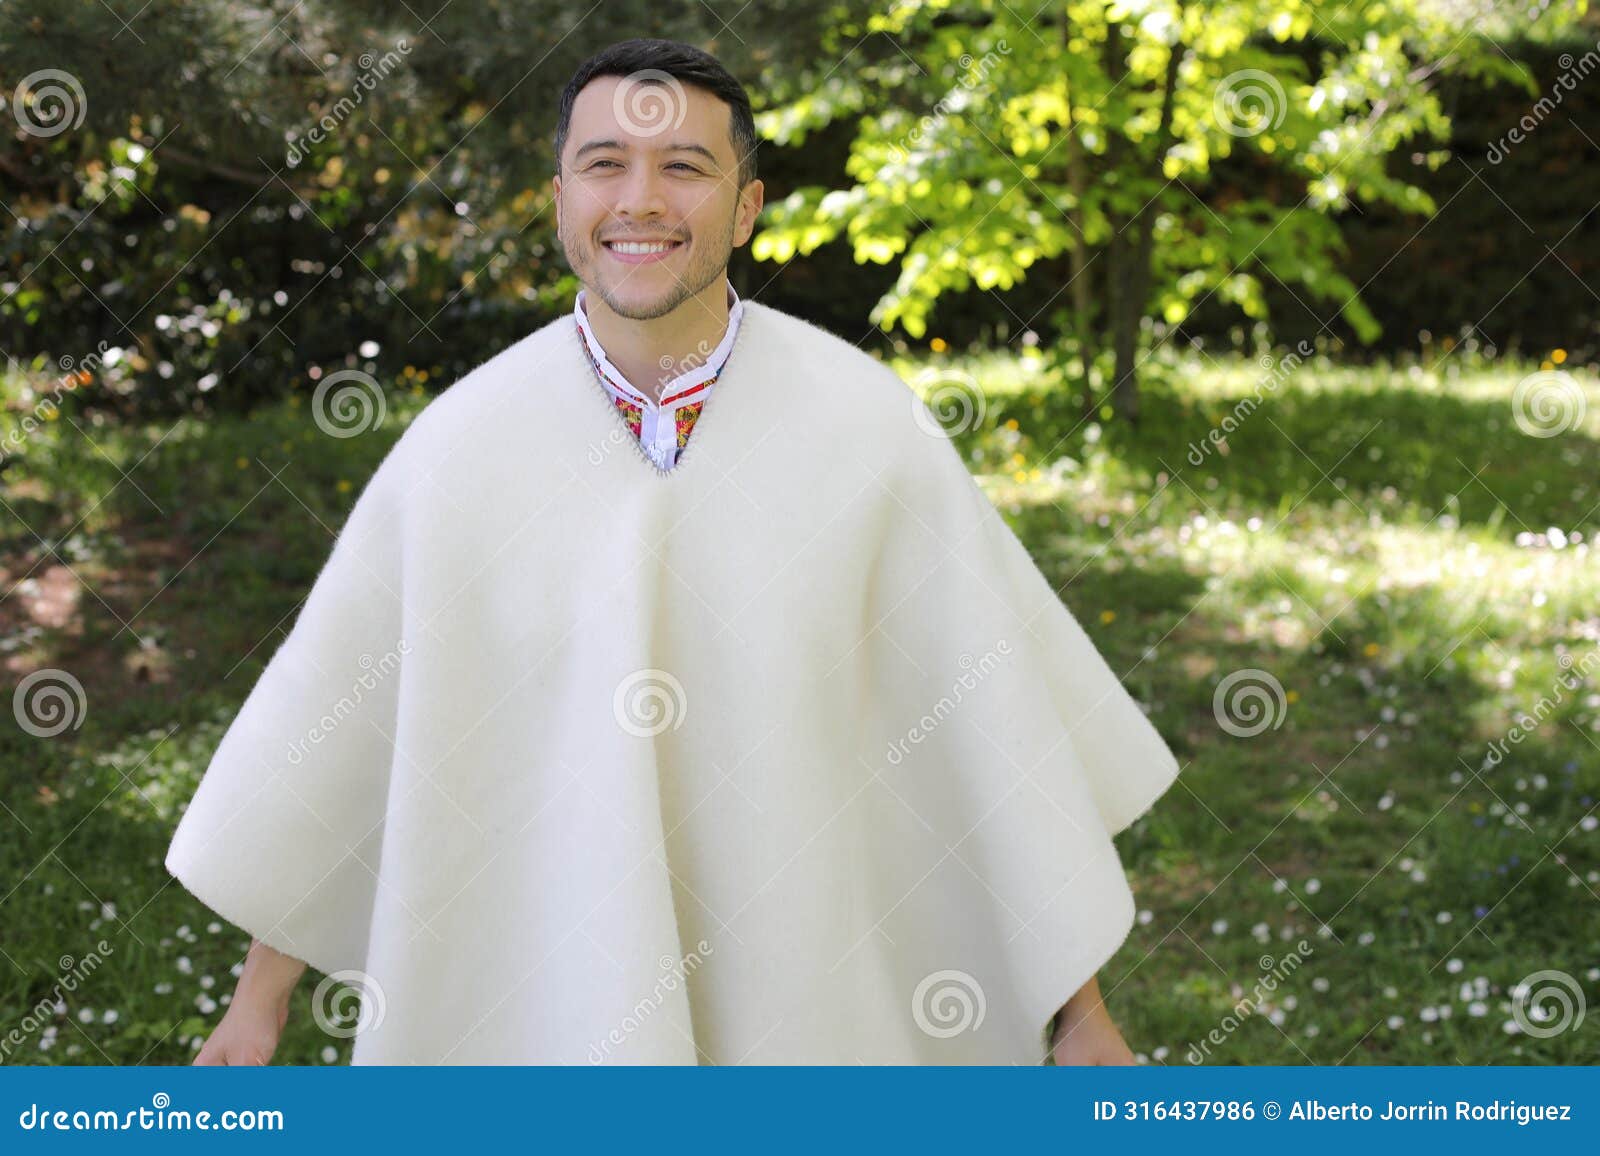 hispanic man wearing a ruana